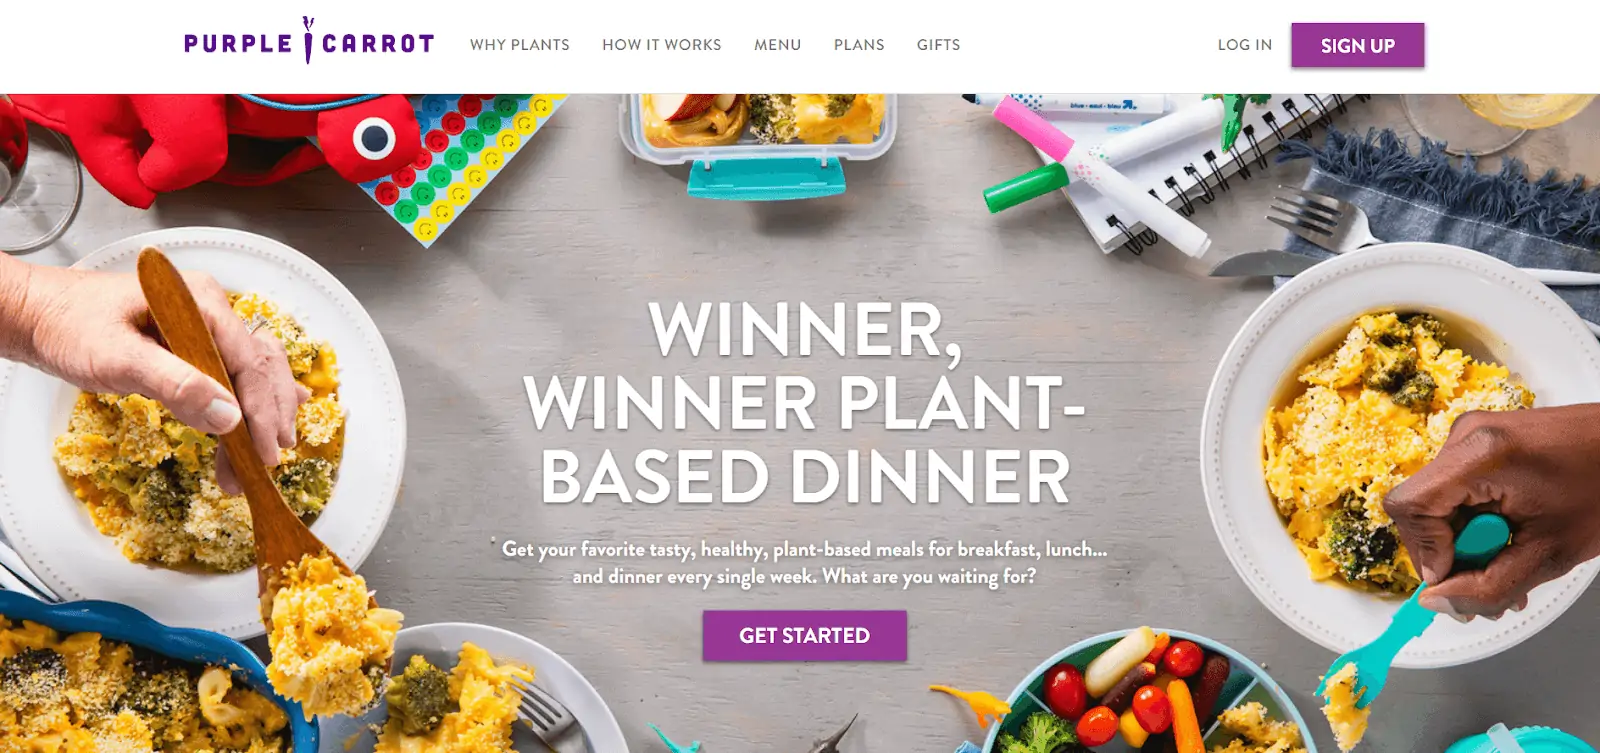 Purple Carrot homepage